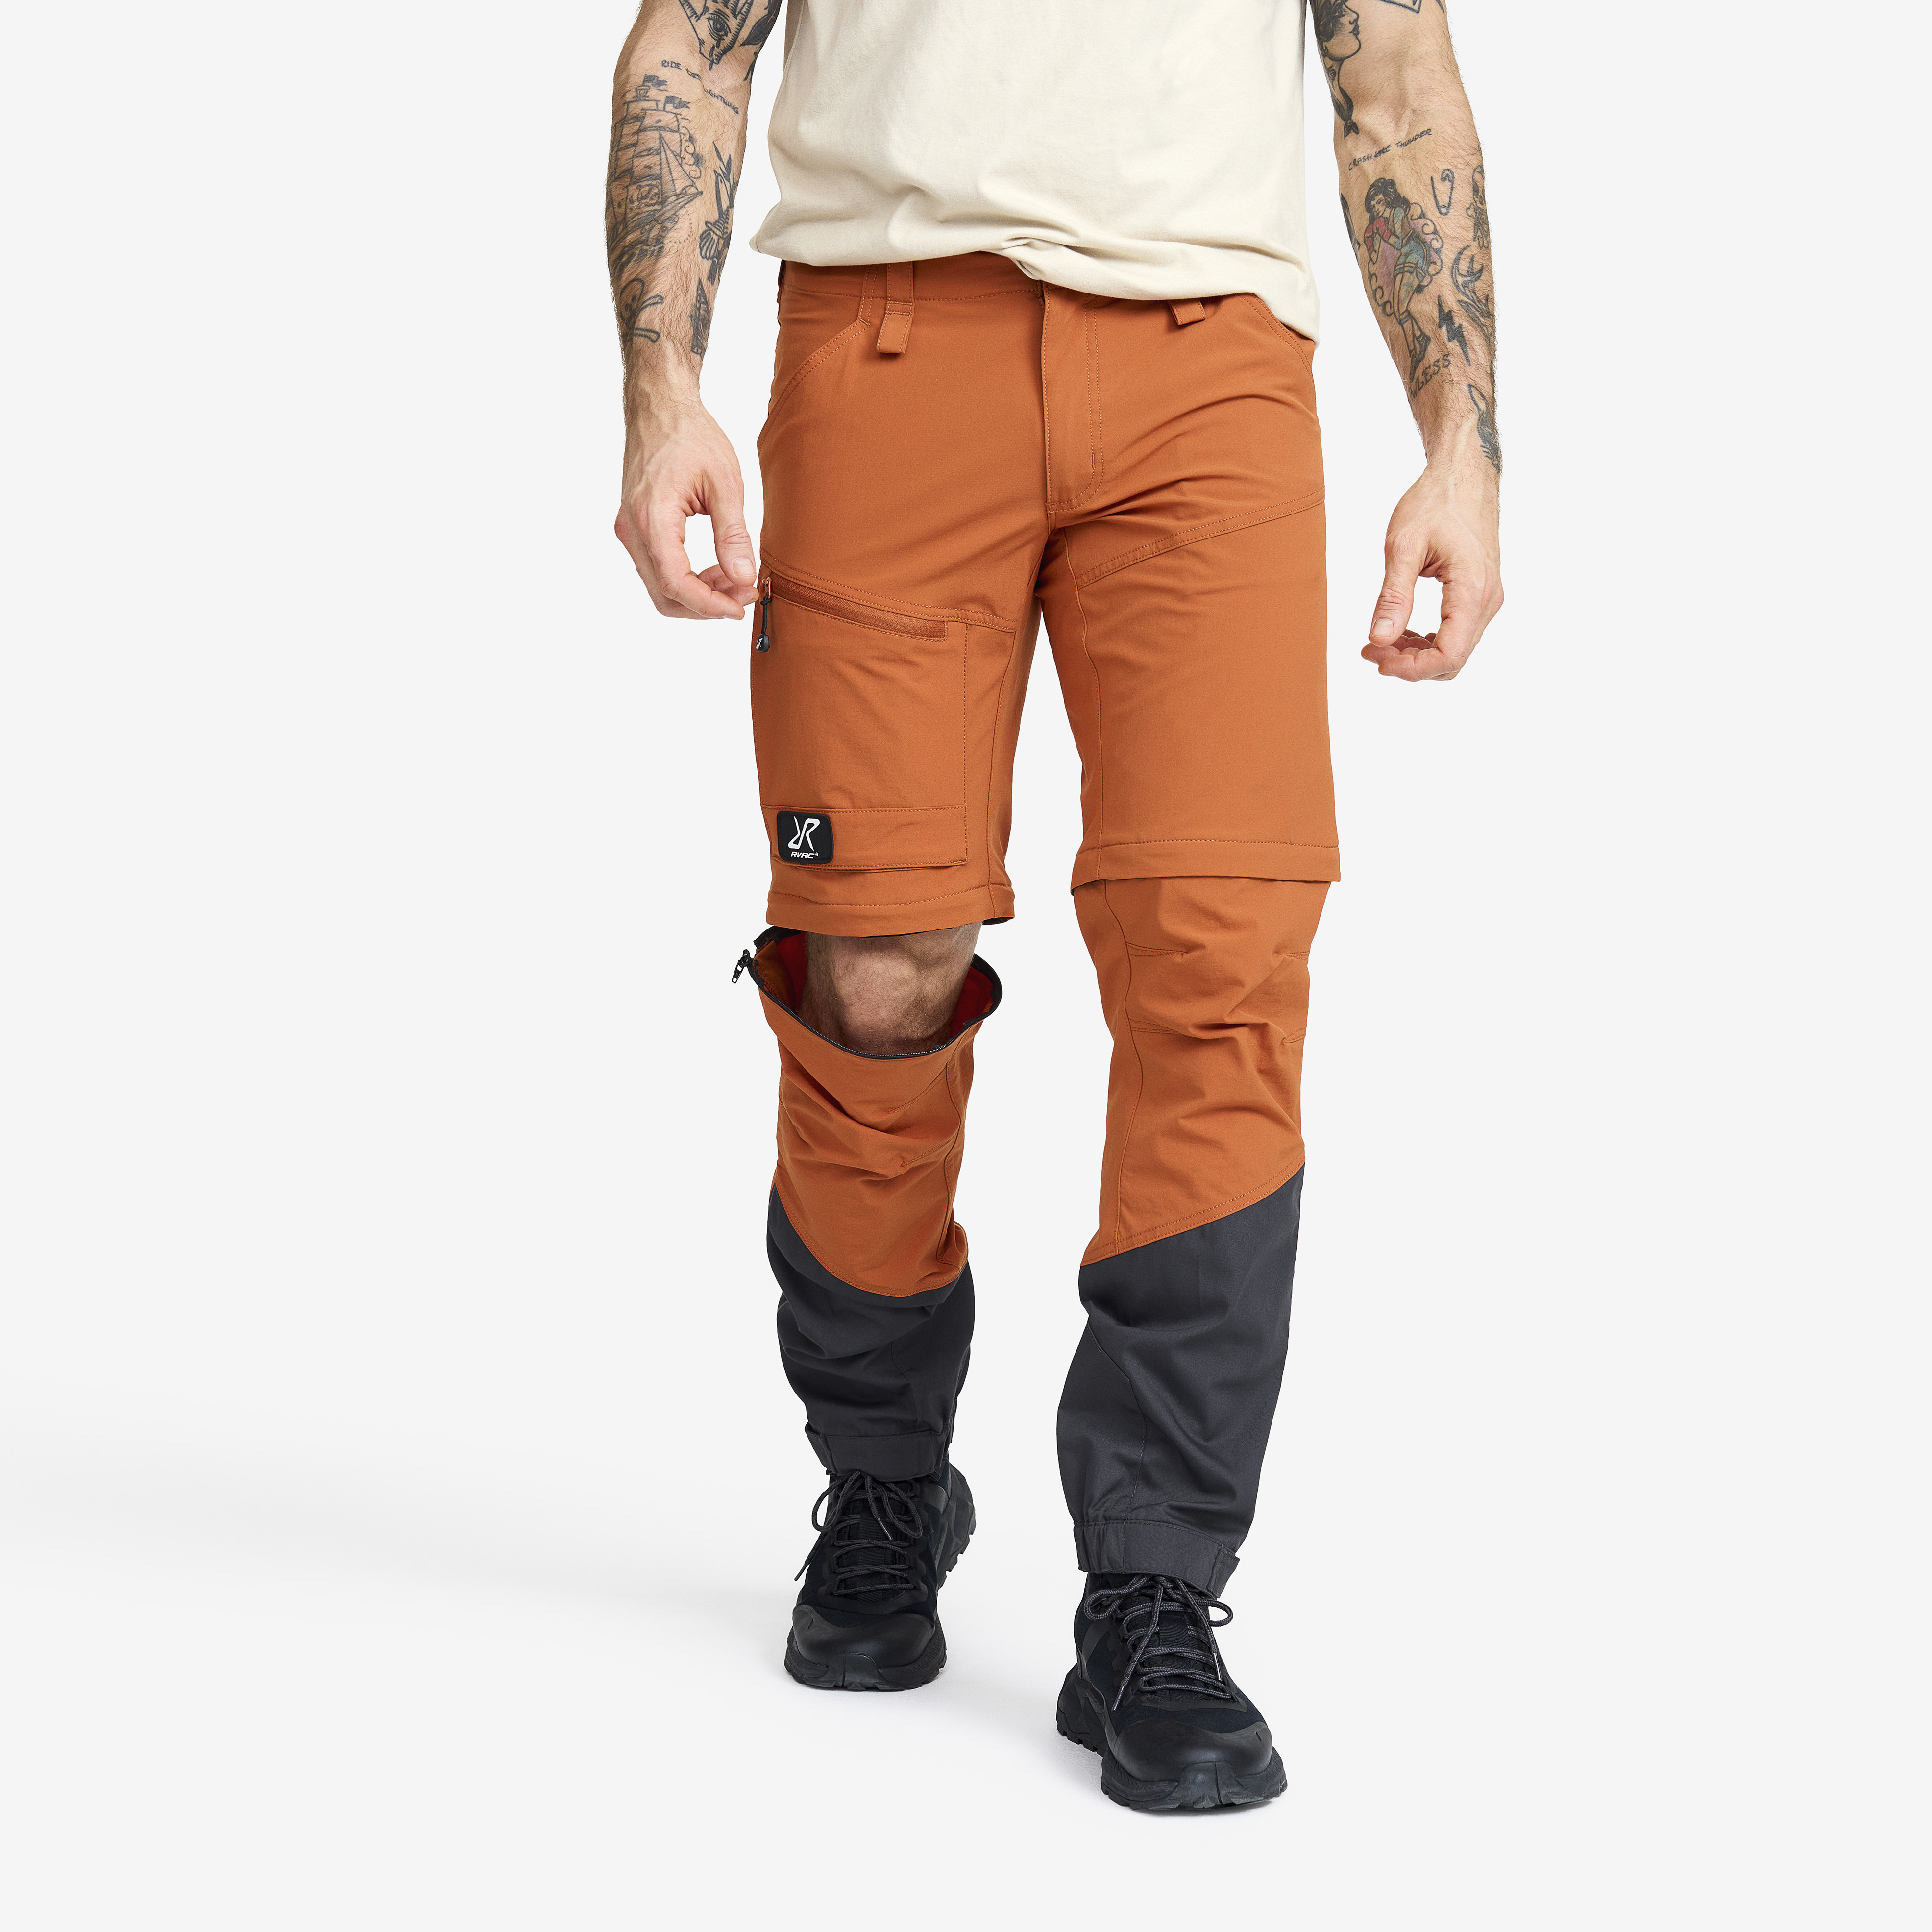 Range Pro Zip-off Pants Teracotta Brown/Anthracite Men